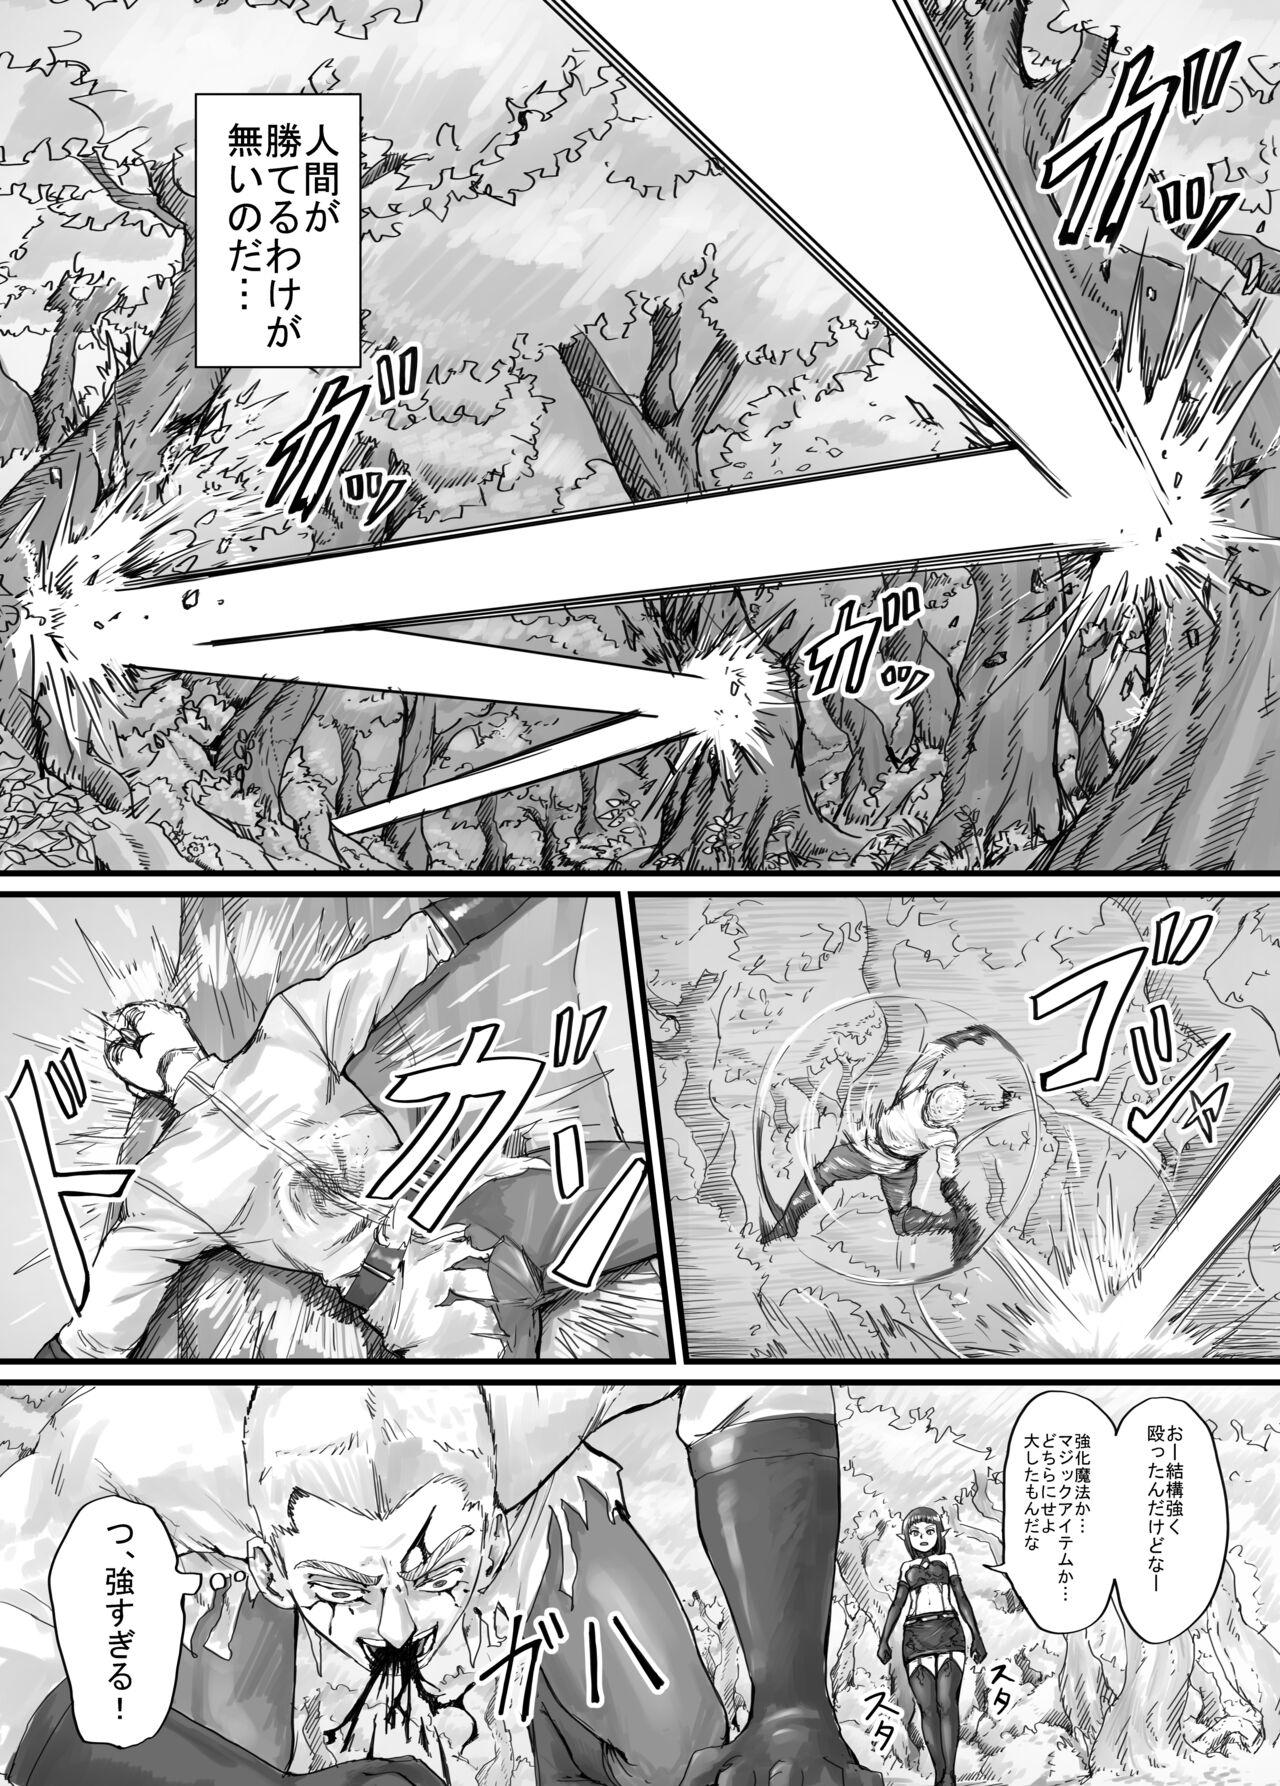 Throat Fuck 魔族ちゃん漫画1 - Original Pick Up - Page 9